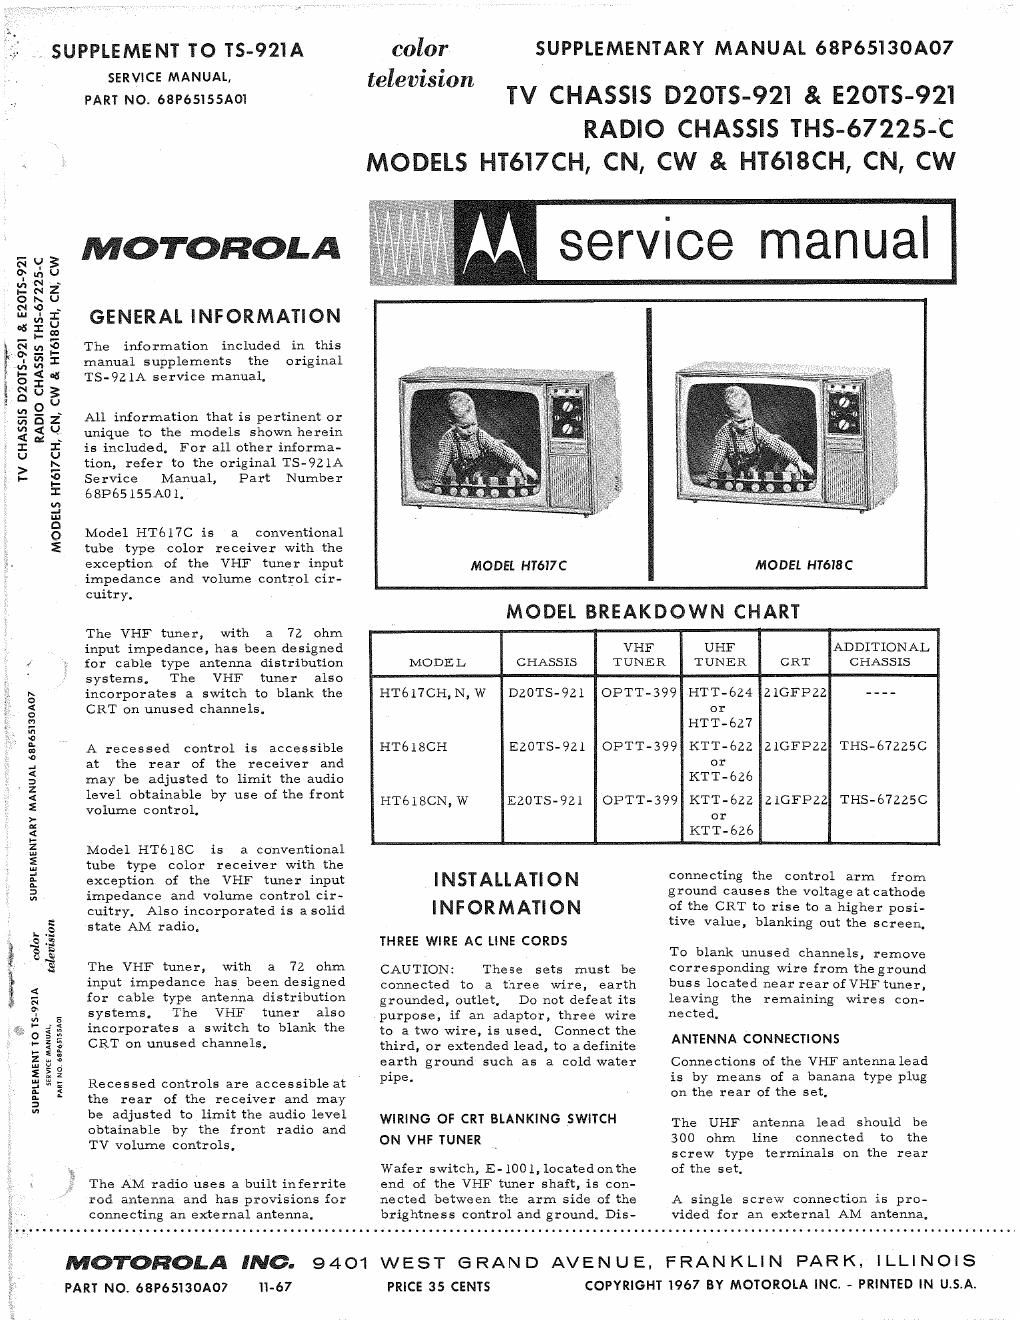 motorola ht 617 ch service manual